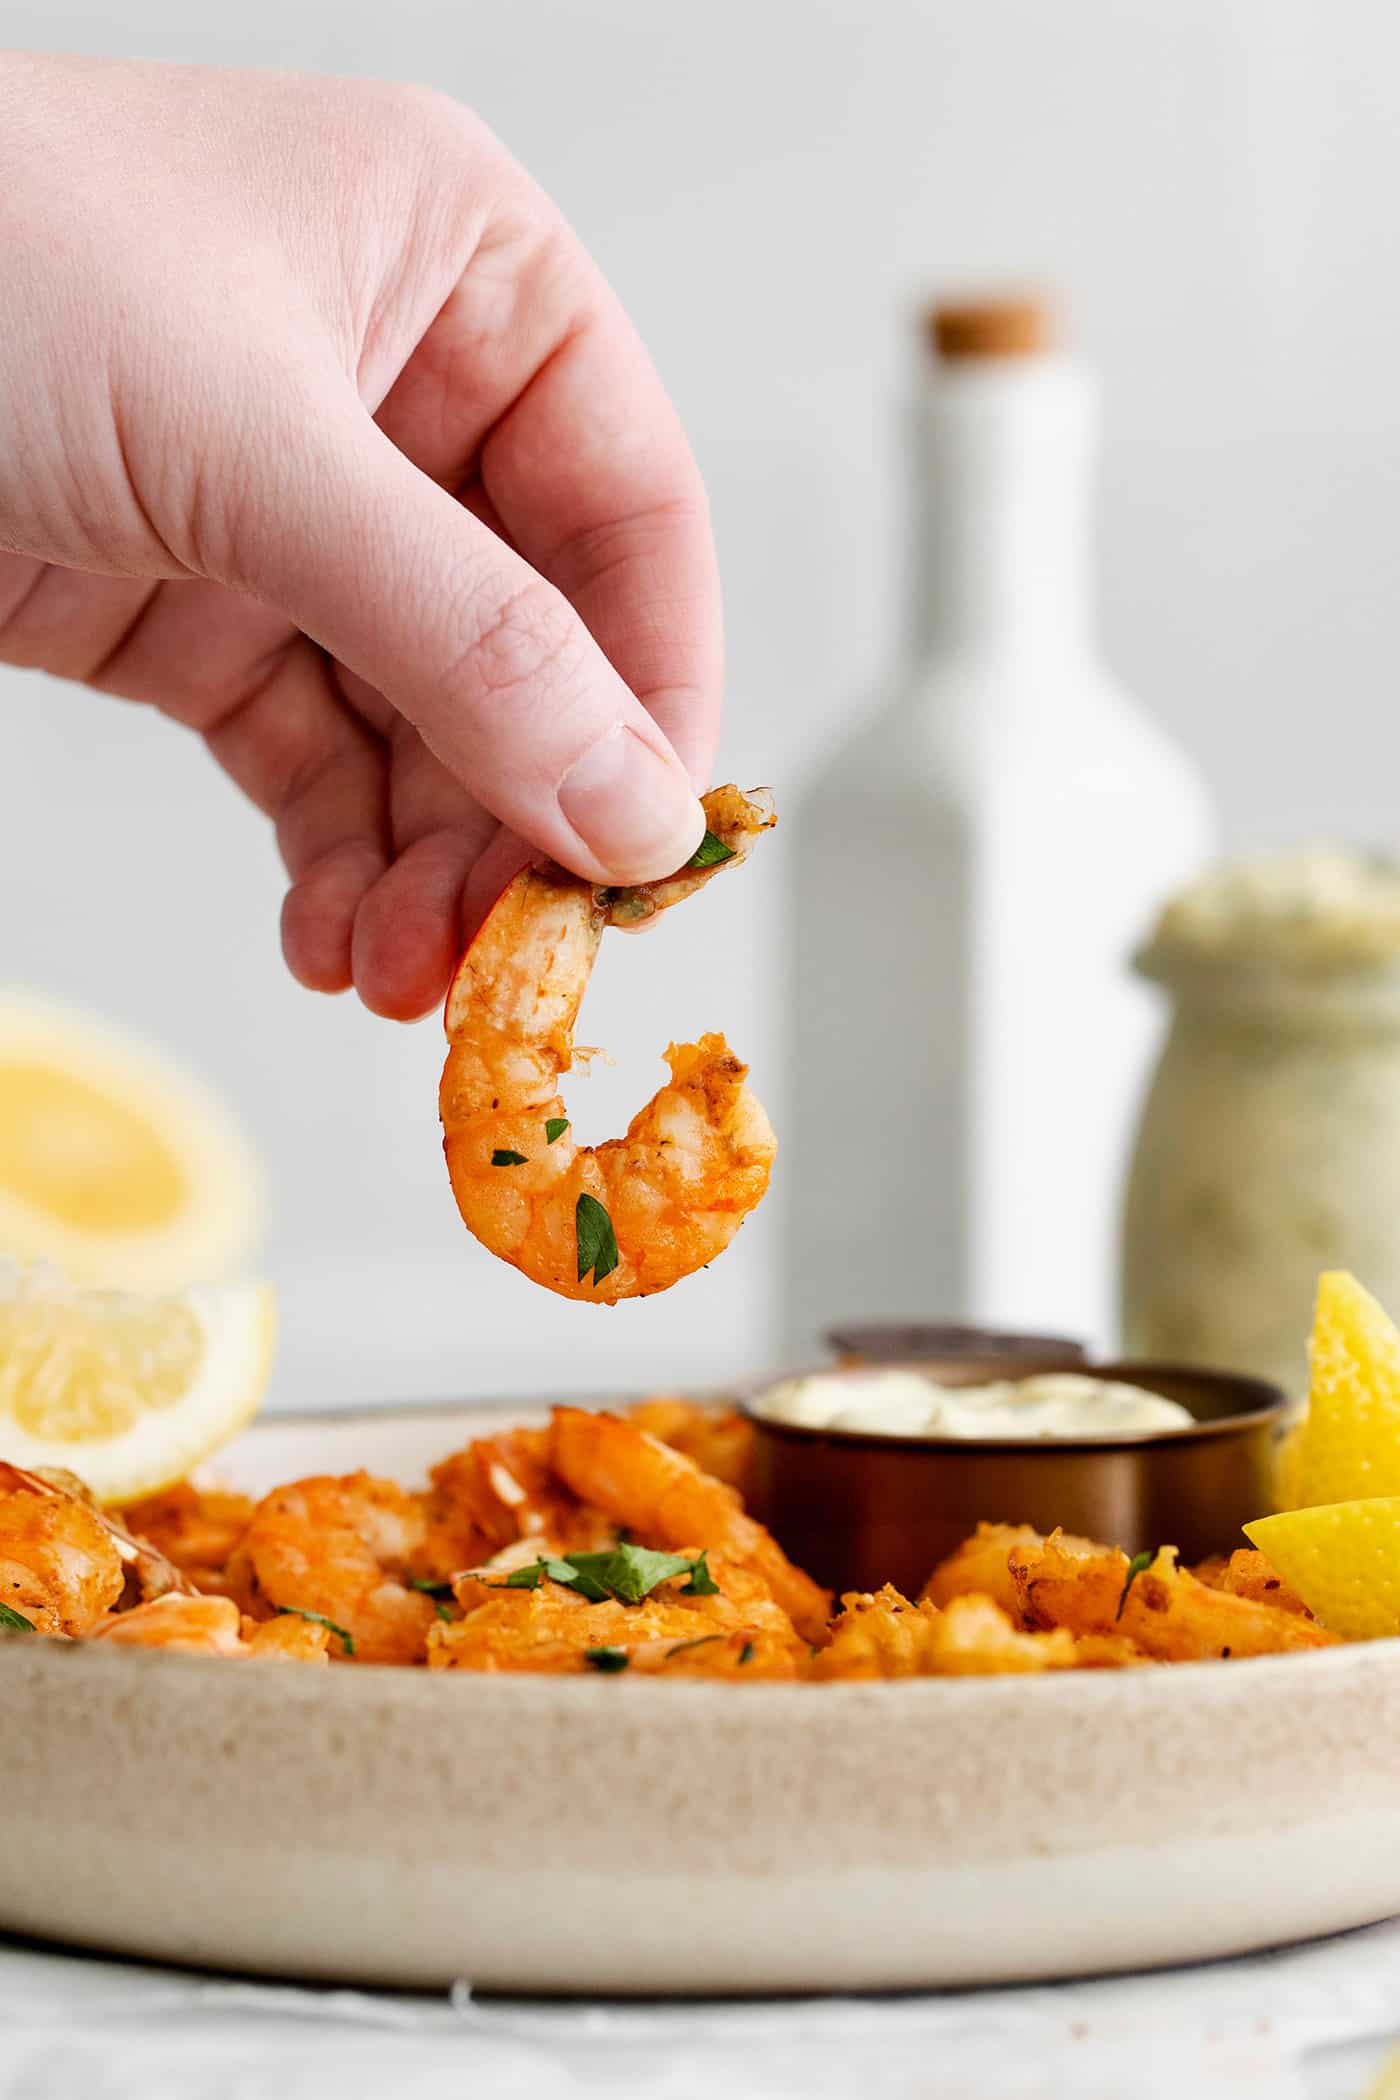 A hand holding seasoned shrimp over tartar sauce